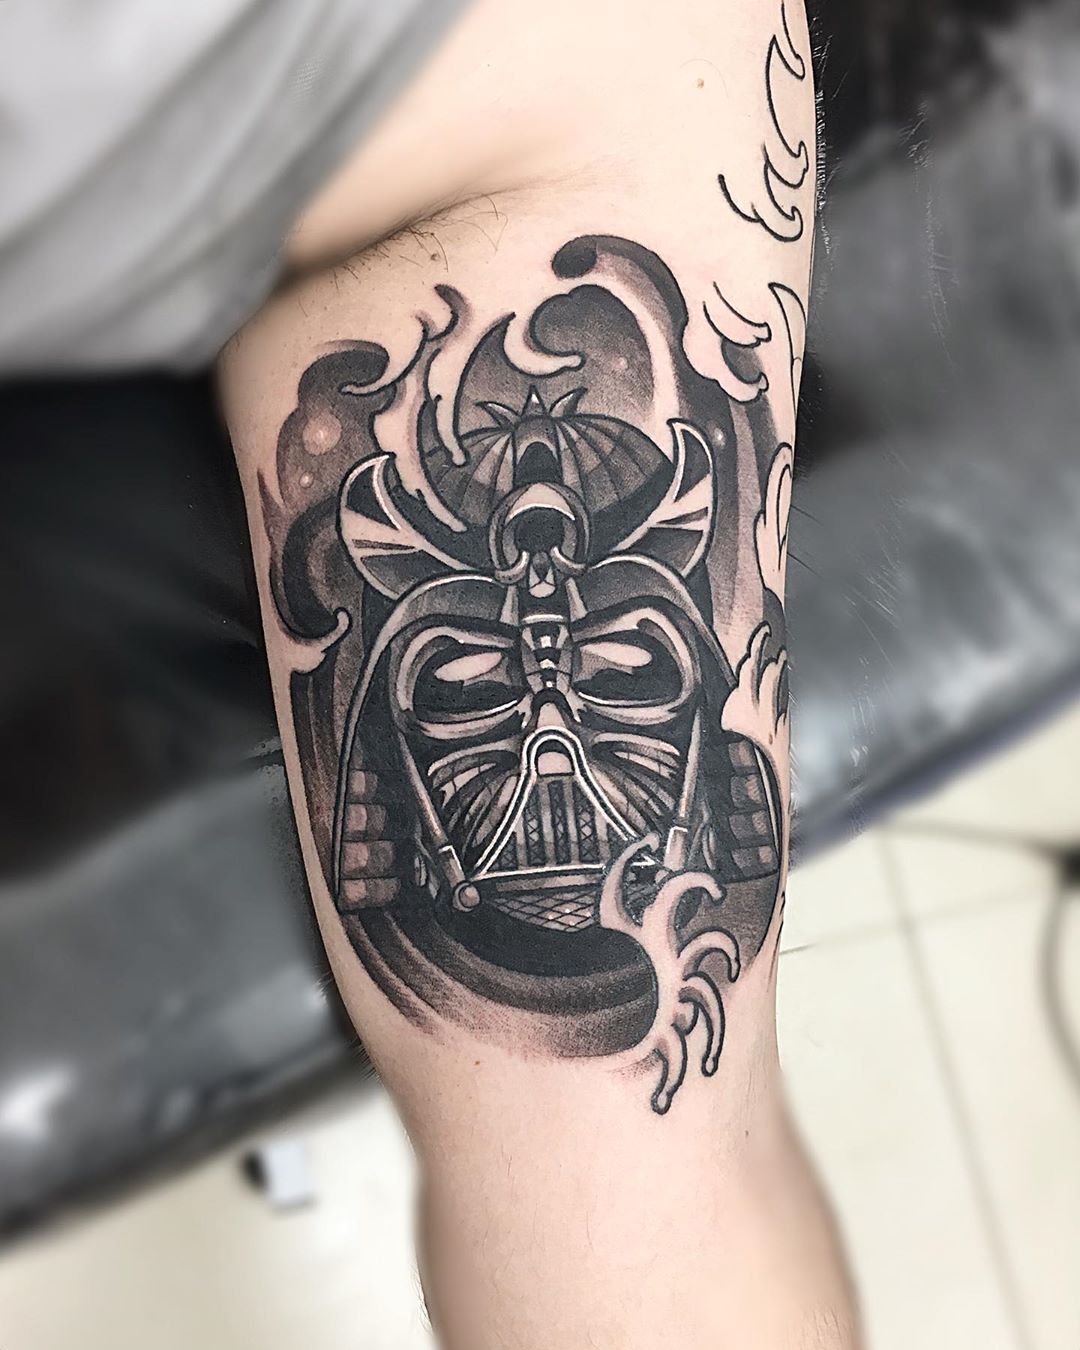 Creative Darth Vader adaptation tattoo, reminiscent of Chinese warrior